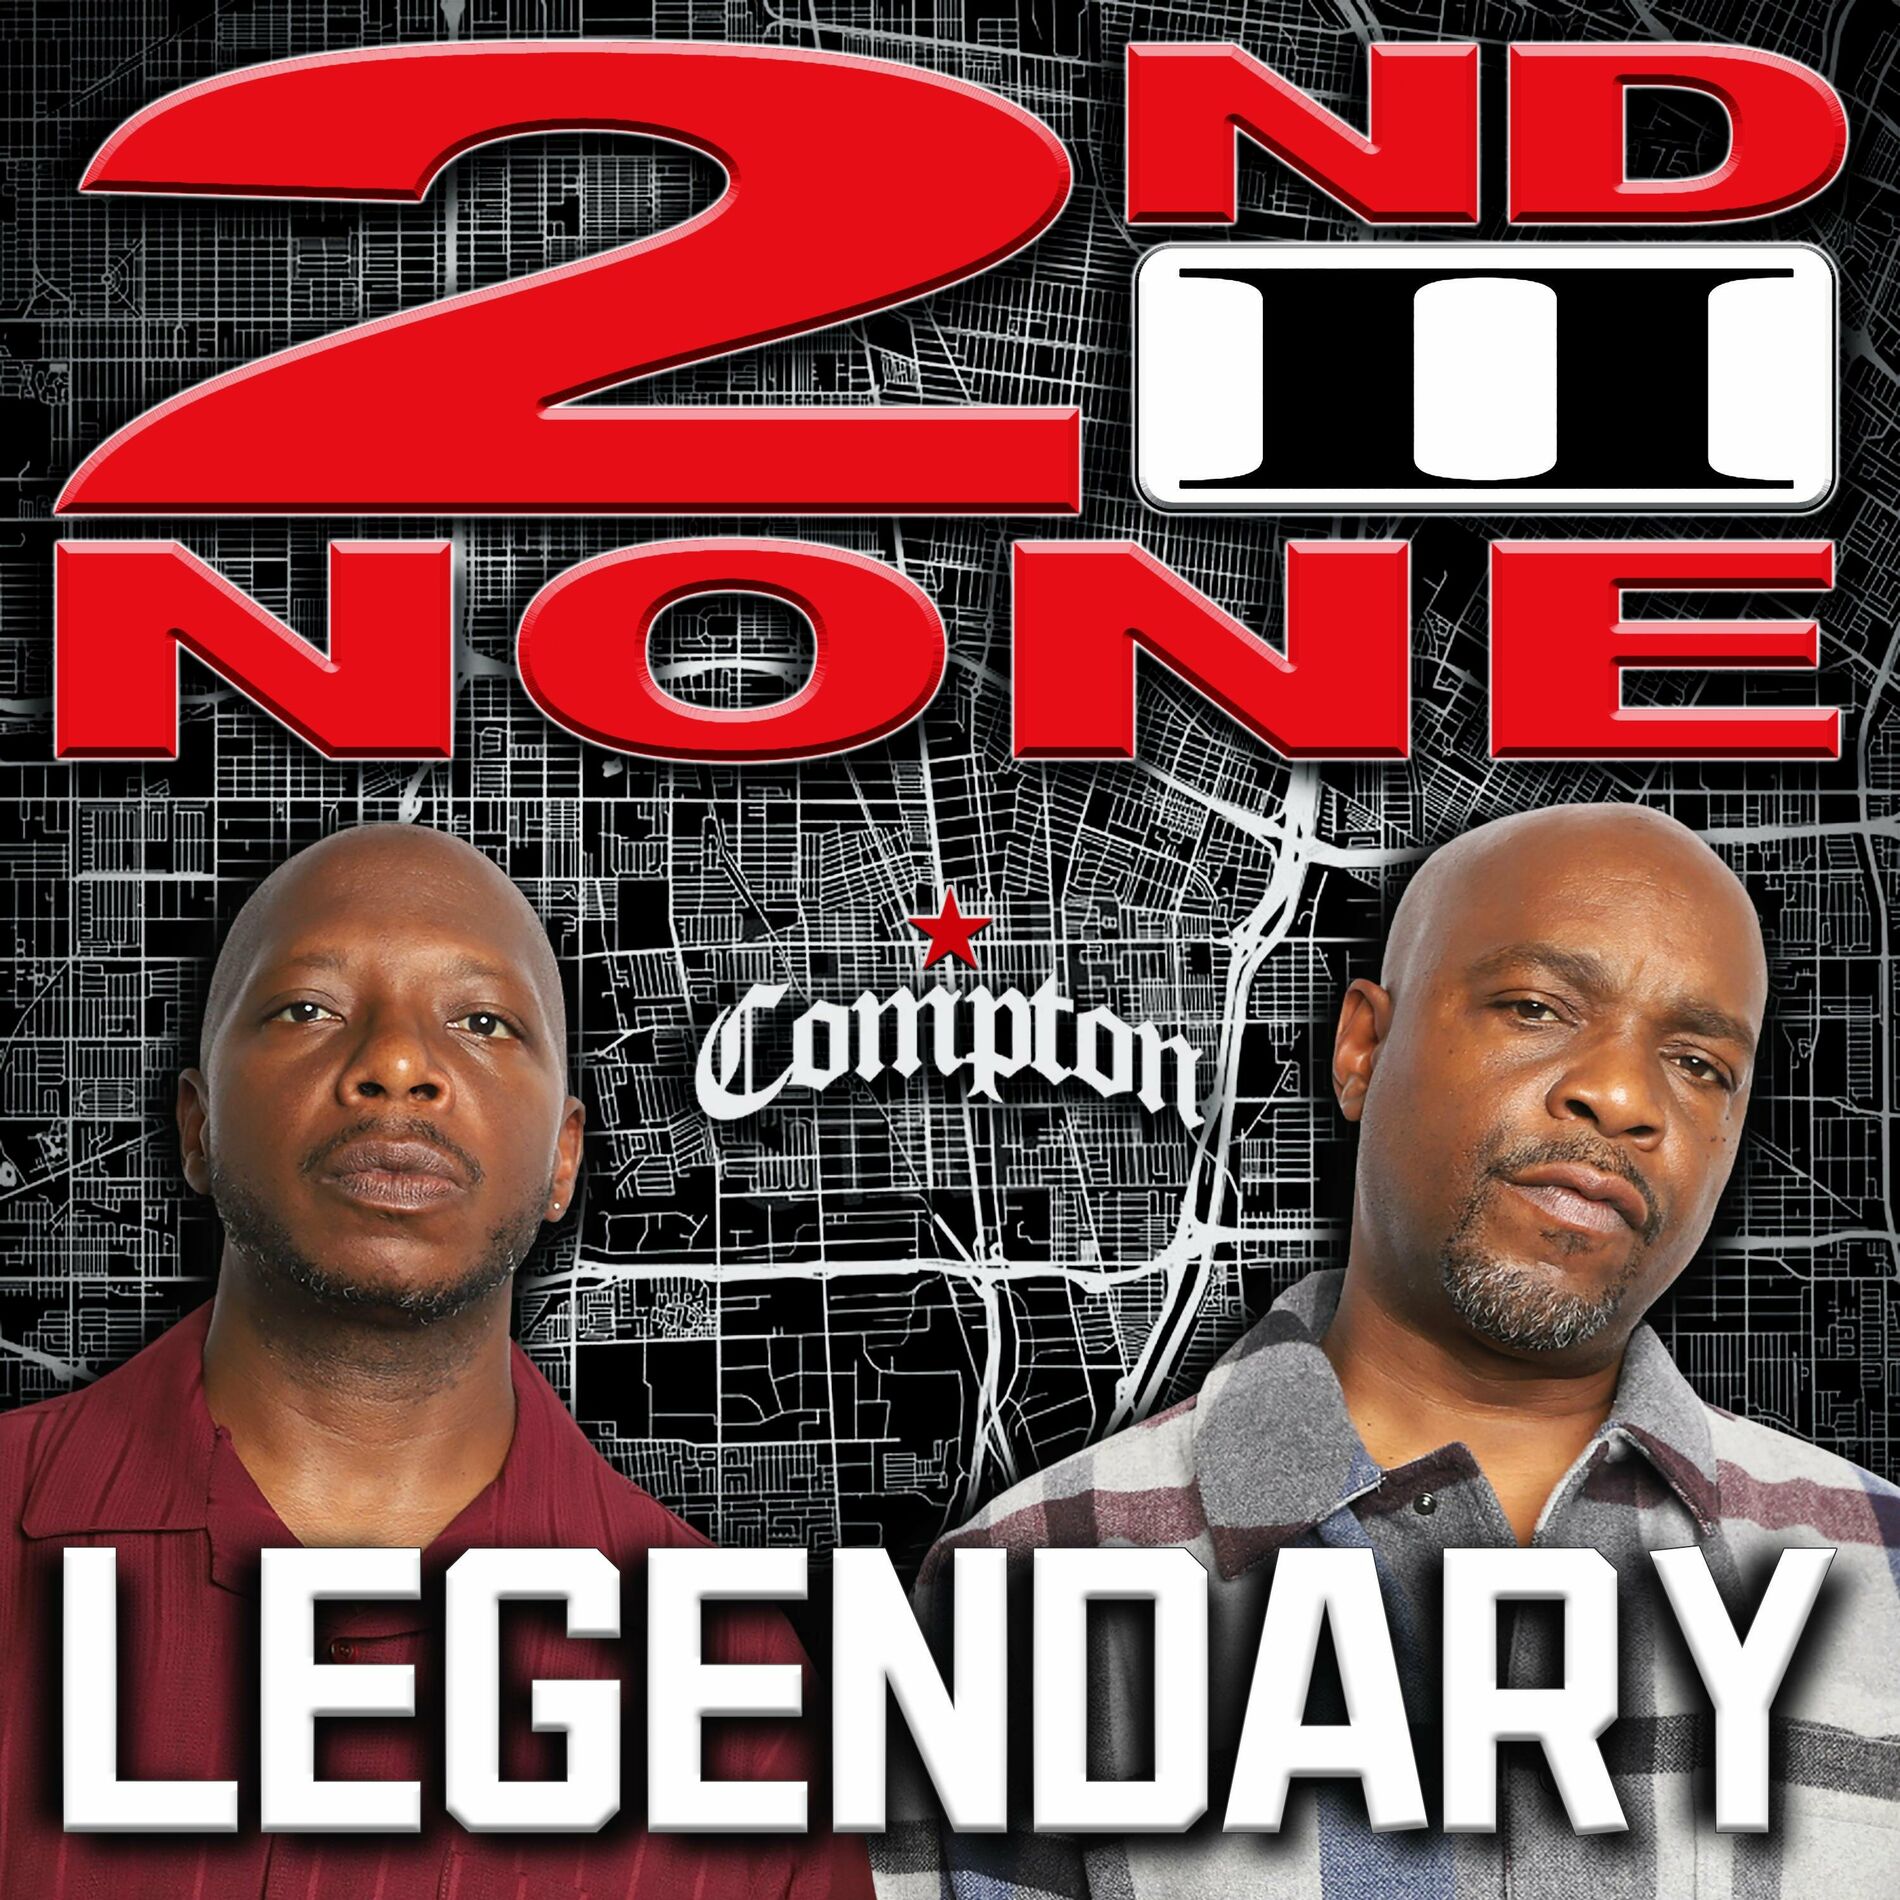 2nd II None: albums, songs, playlists | Listen on Deezer